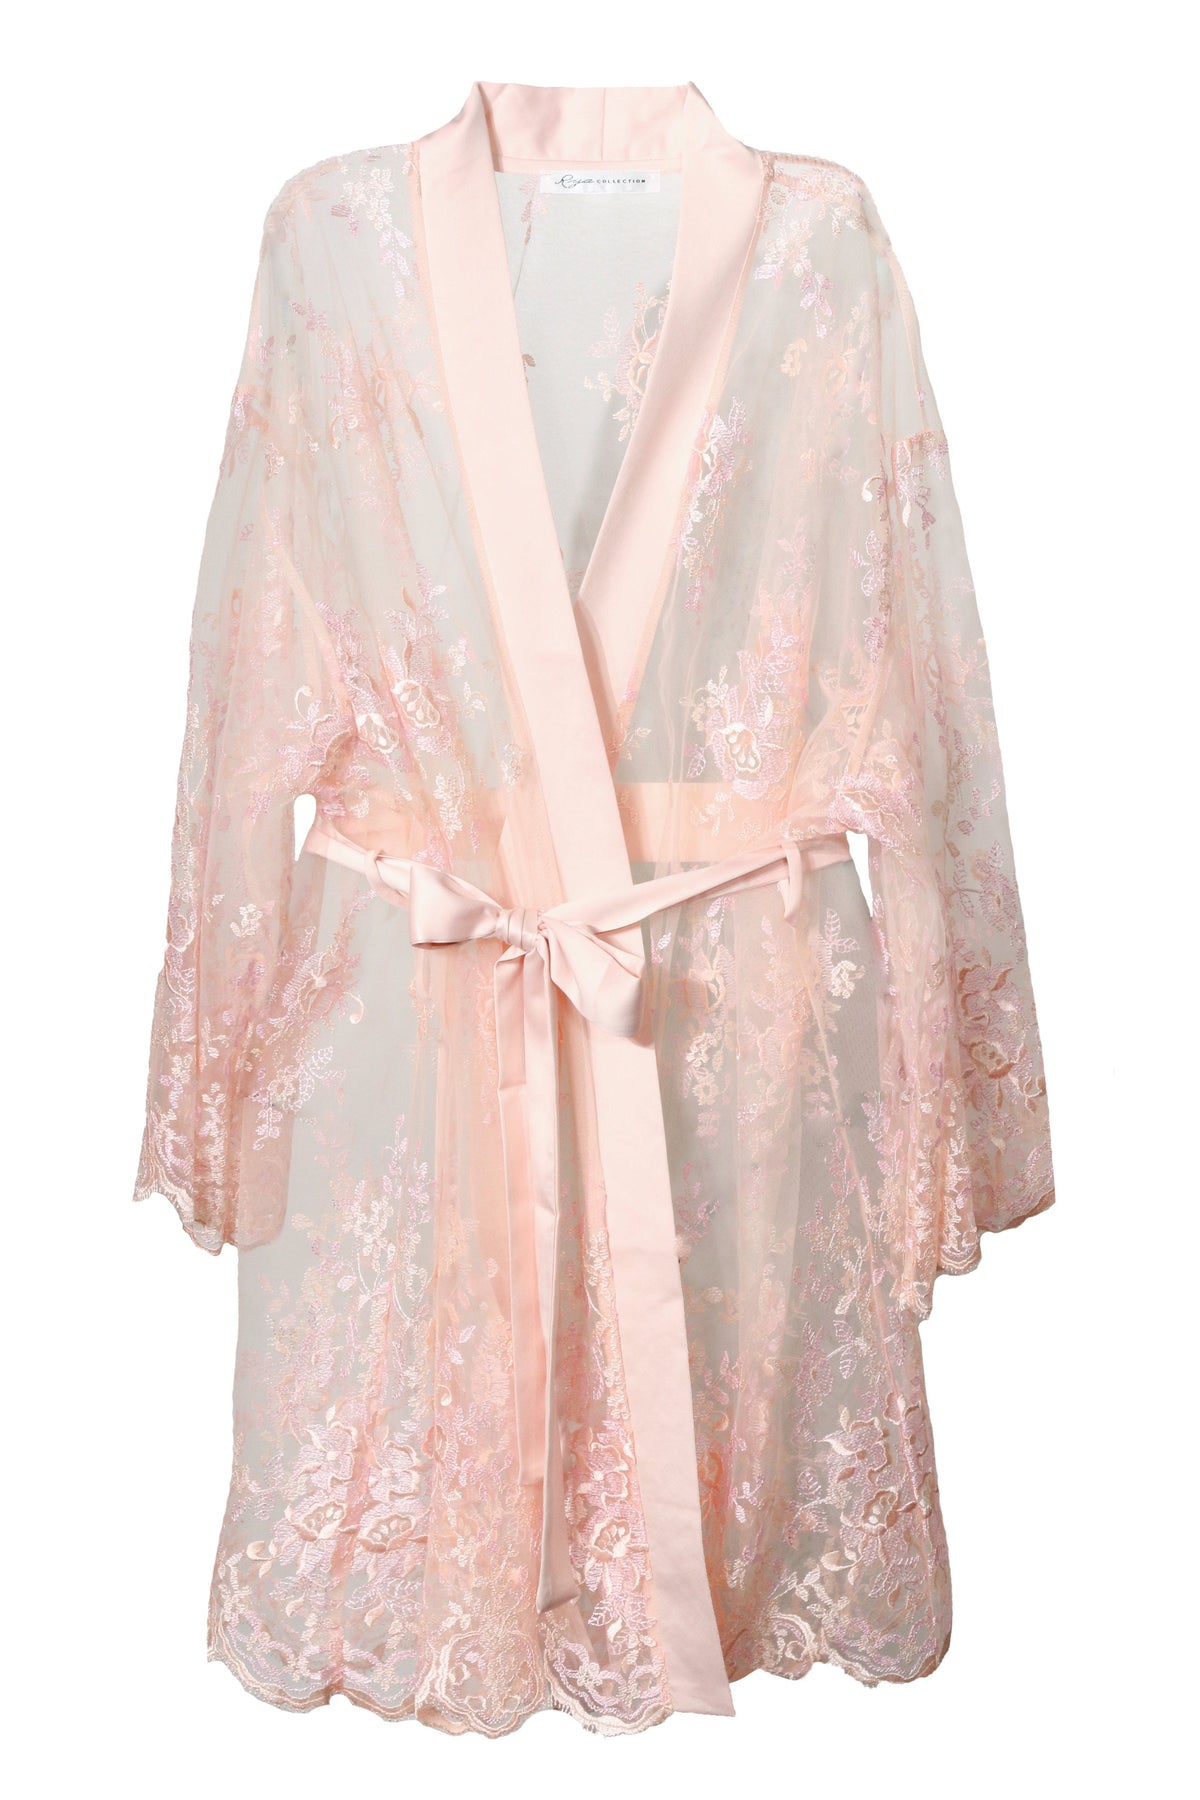 Rya Collection Robes Petal Pink / XS/S Darling Robe - Petal Pink